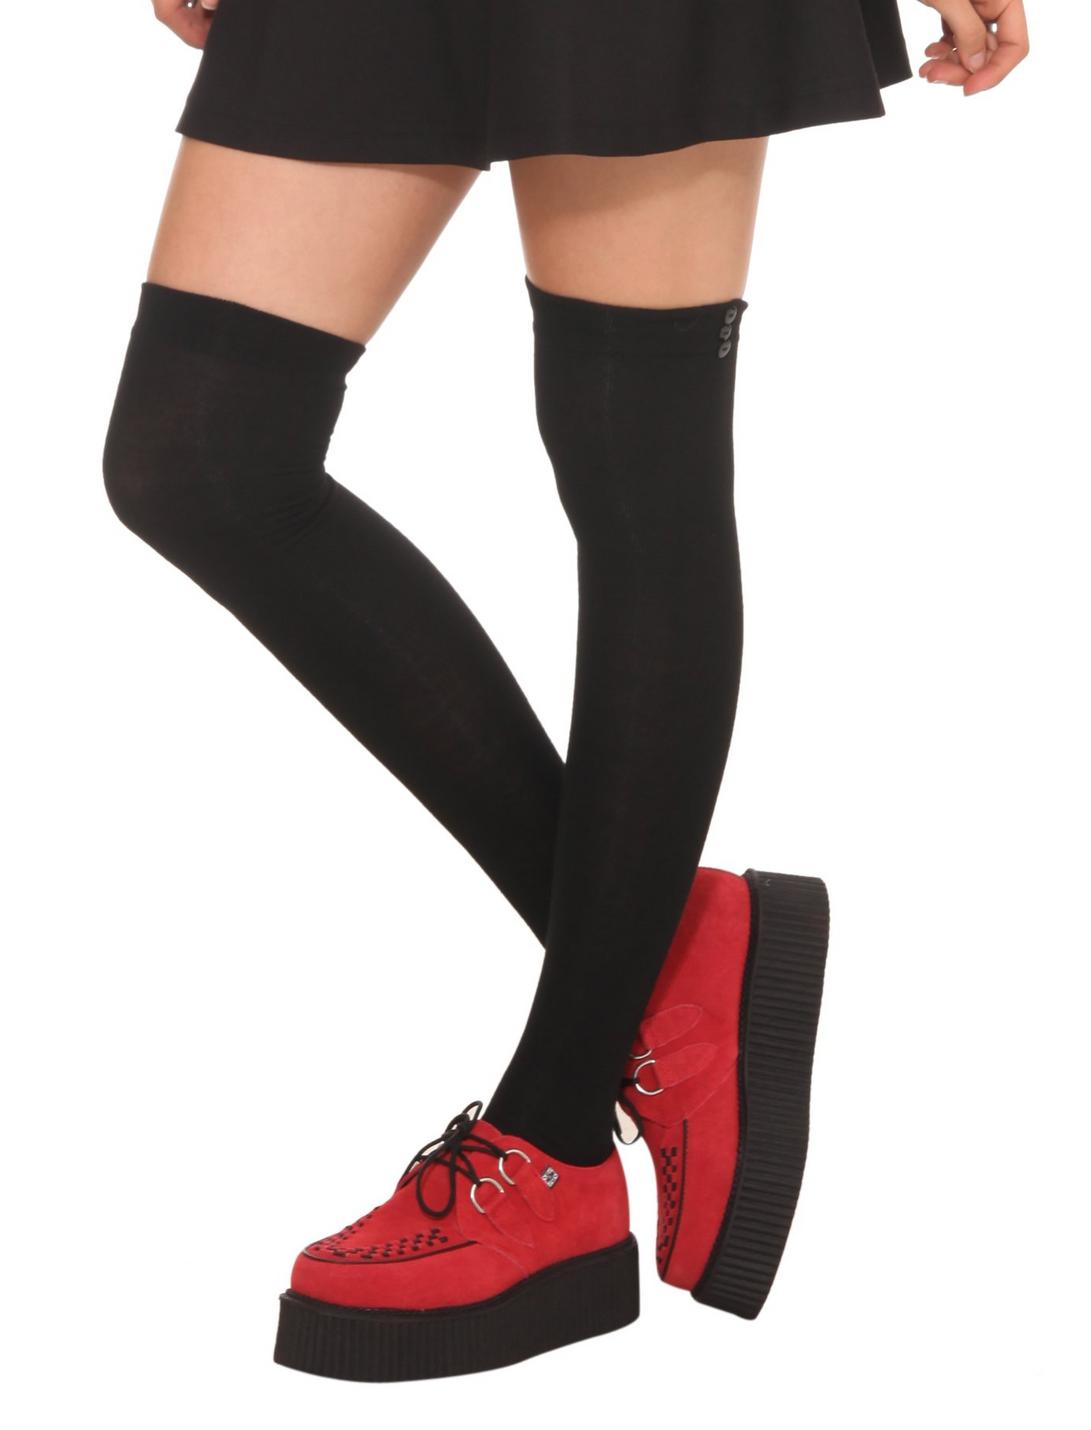 LOVEsick Black Over-The-Knee Socks, , hi-res